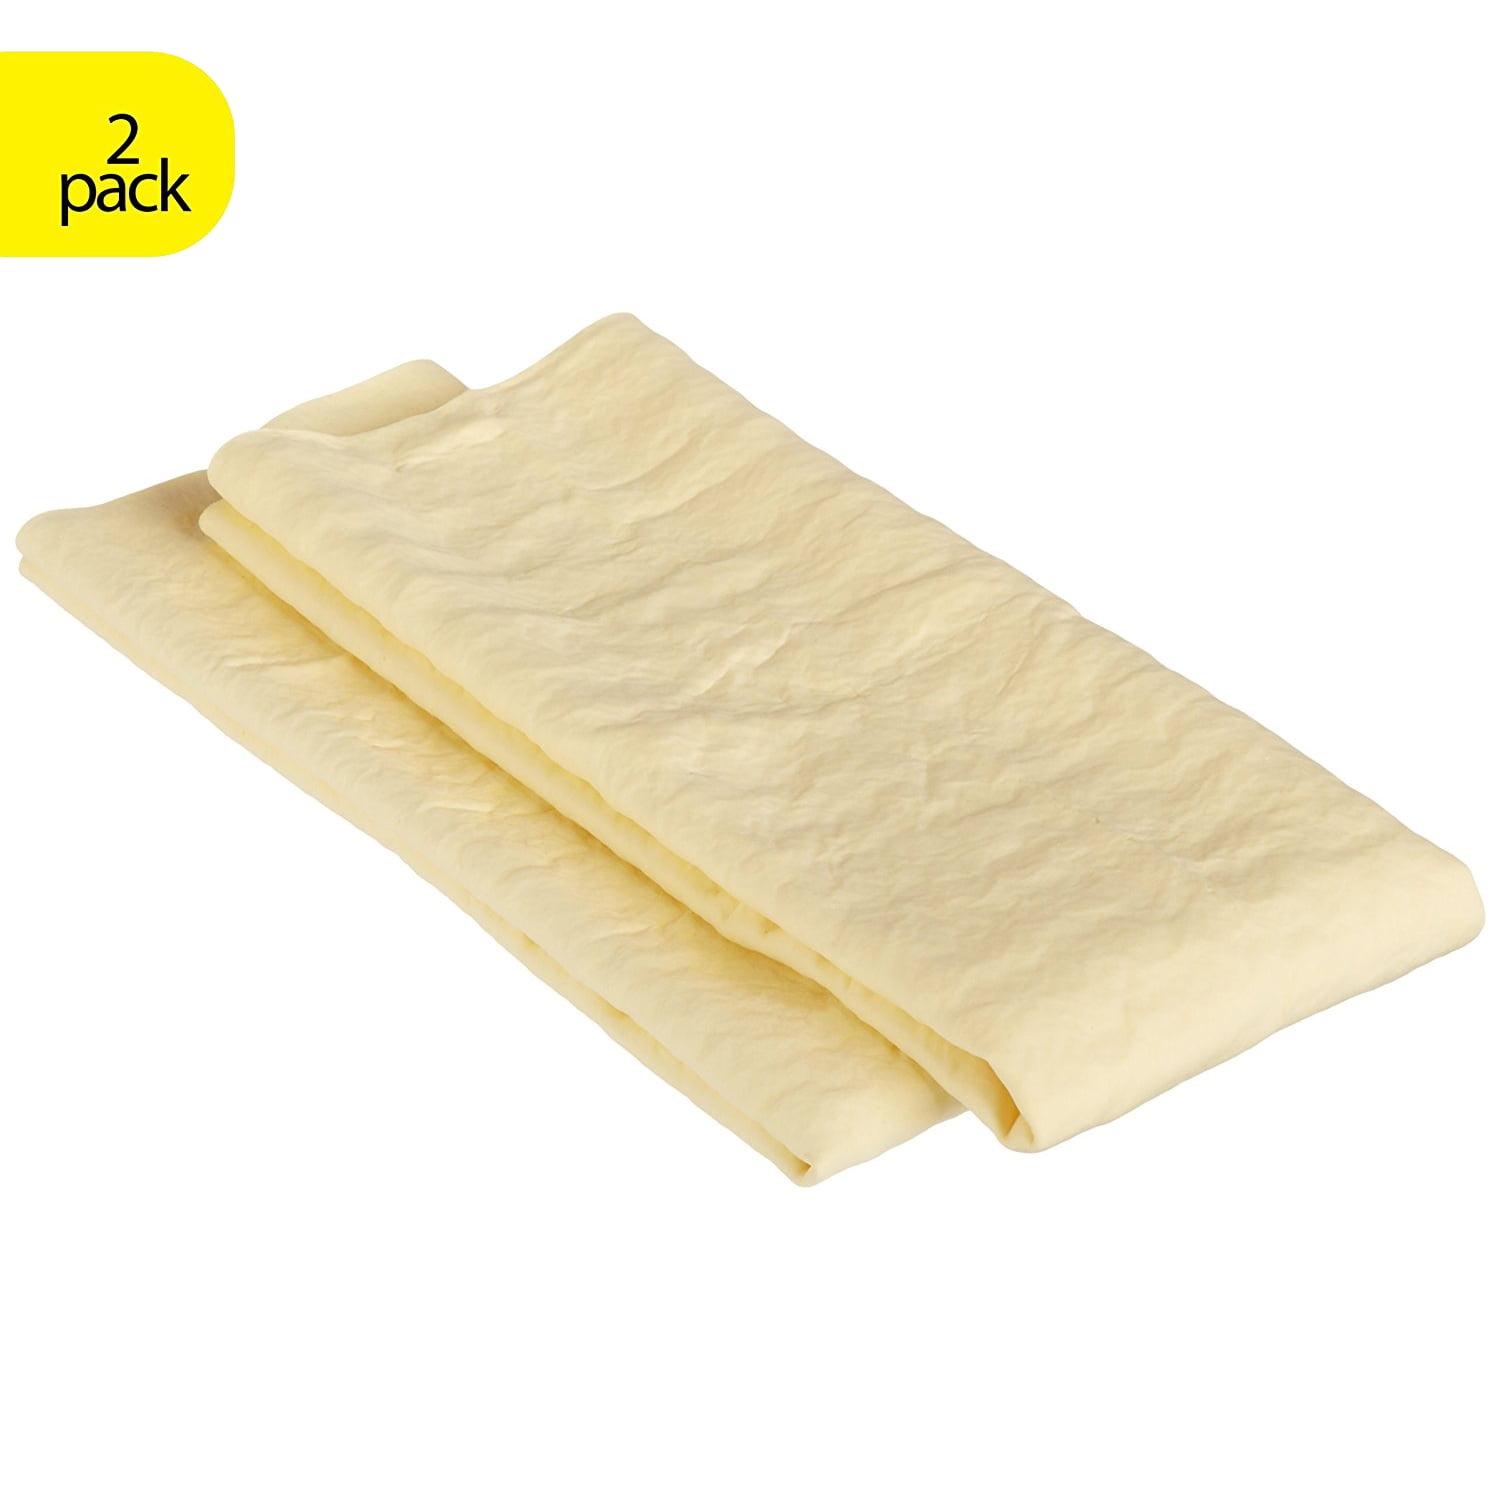 Premium Chamois Cloth for Car 2pack 26”x17” Scratch-Free Super Absorbent Reusable Shammy Cloth for Car 1 Bonus Car Shammy Towel 